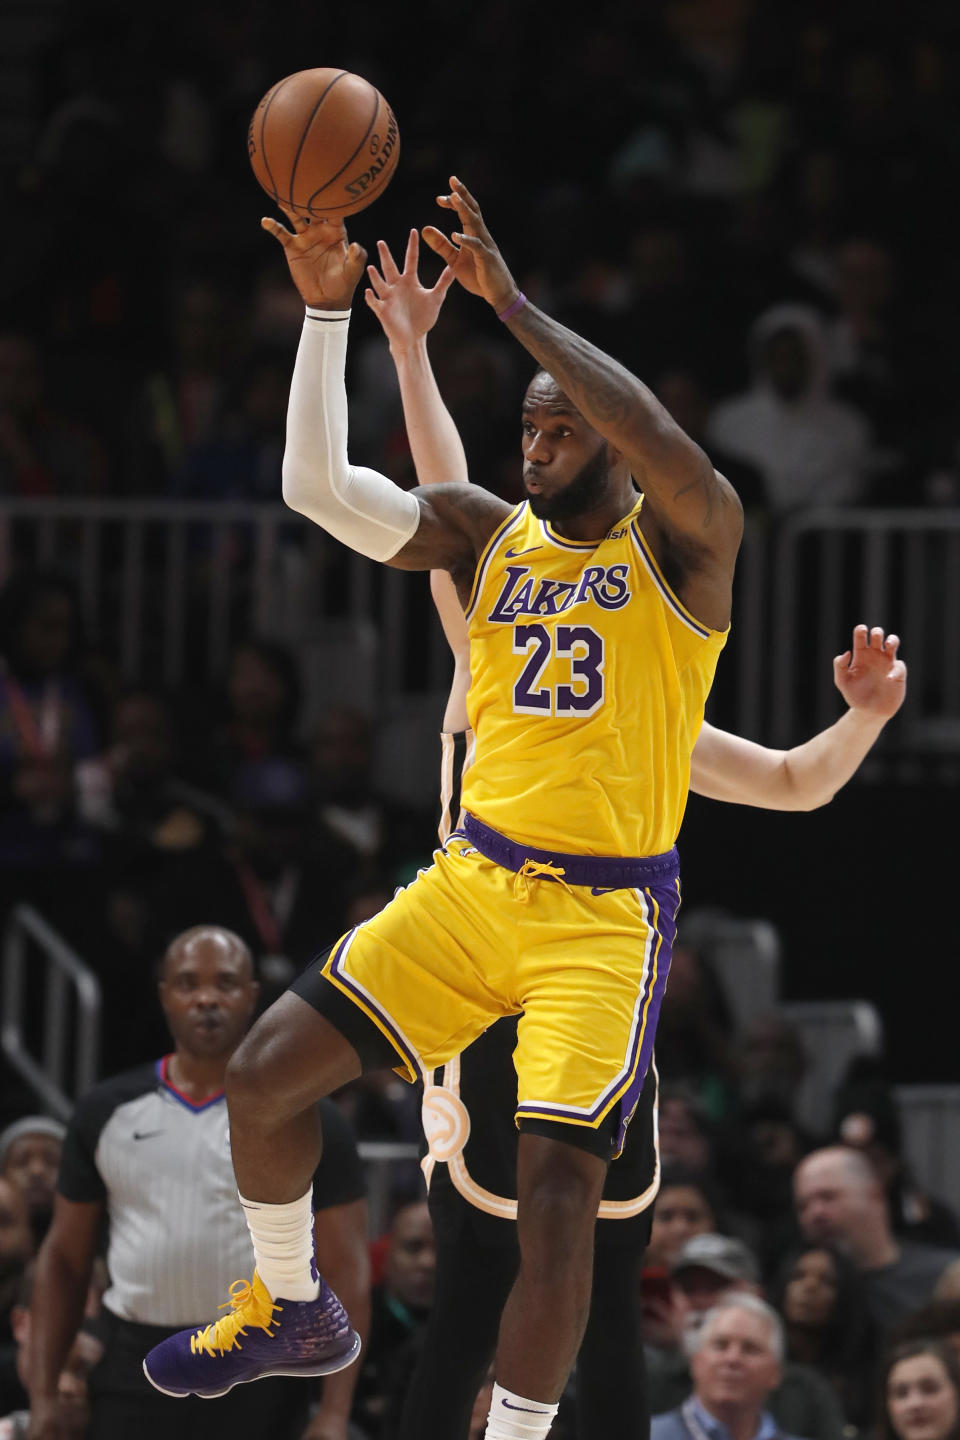 Los Angeles Lakers forward LeBron James (23) passes the ball in the second half of an NBA basketball game against the Atlanta Hawks, Sunday, Dec. 15, 2019, in Atlanta. (AP Photo/John Bazemore)